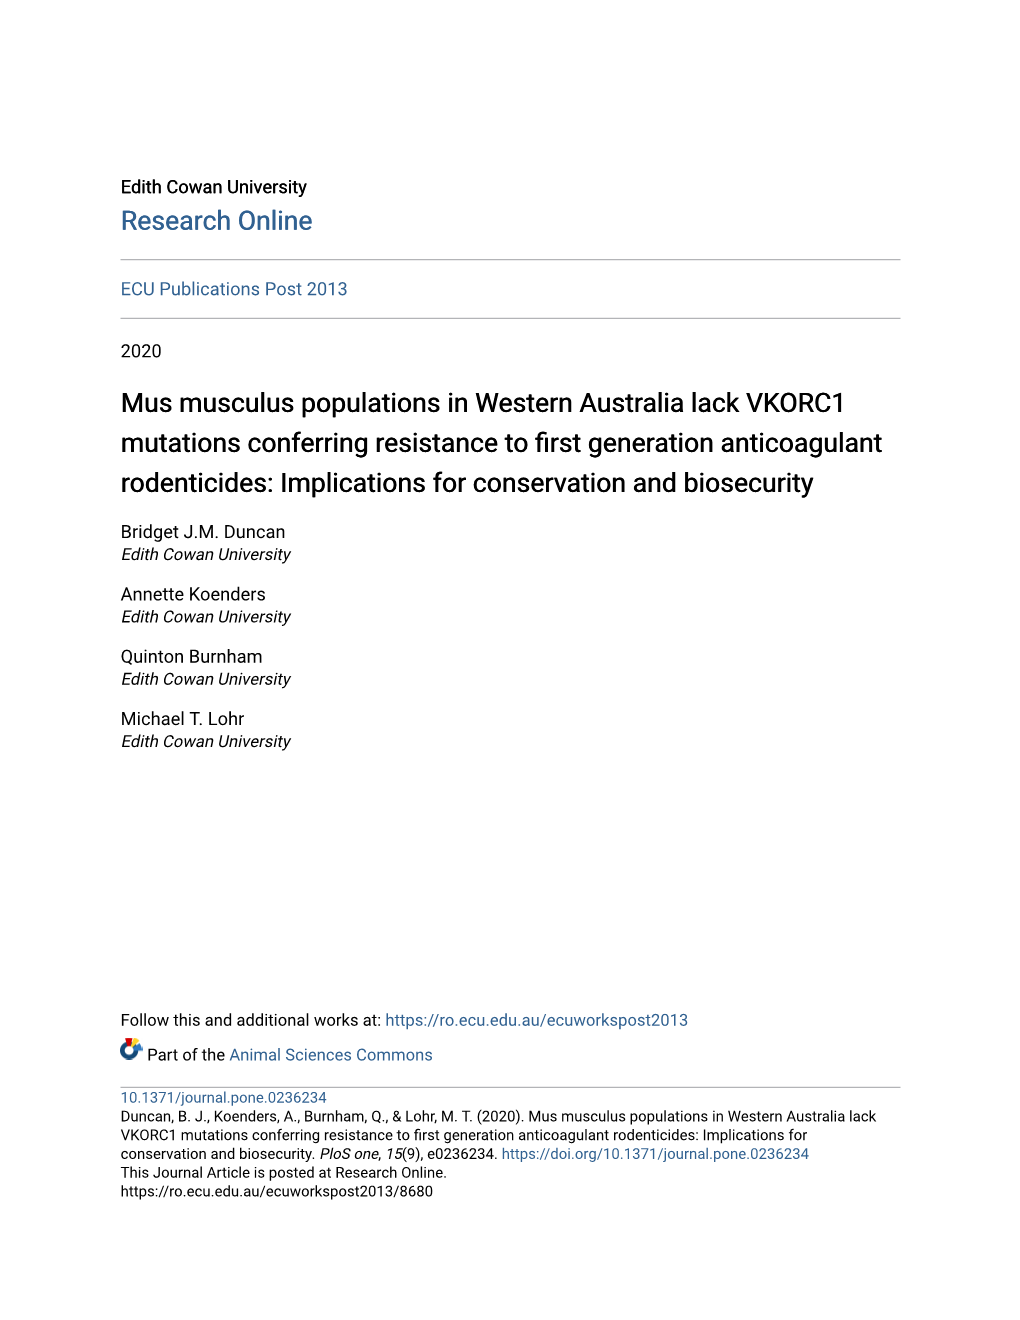 Mus Musculus Populations in Western Australia